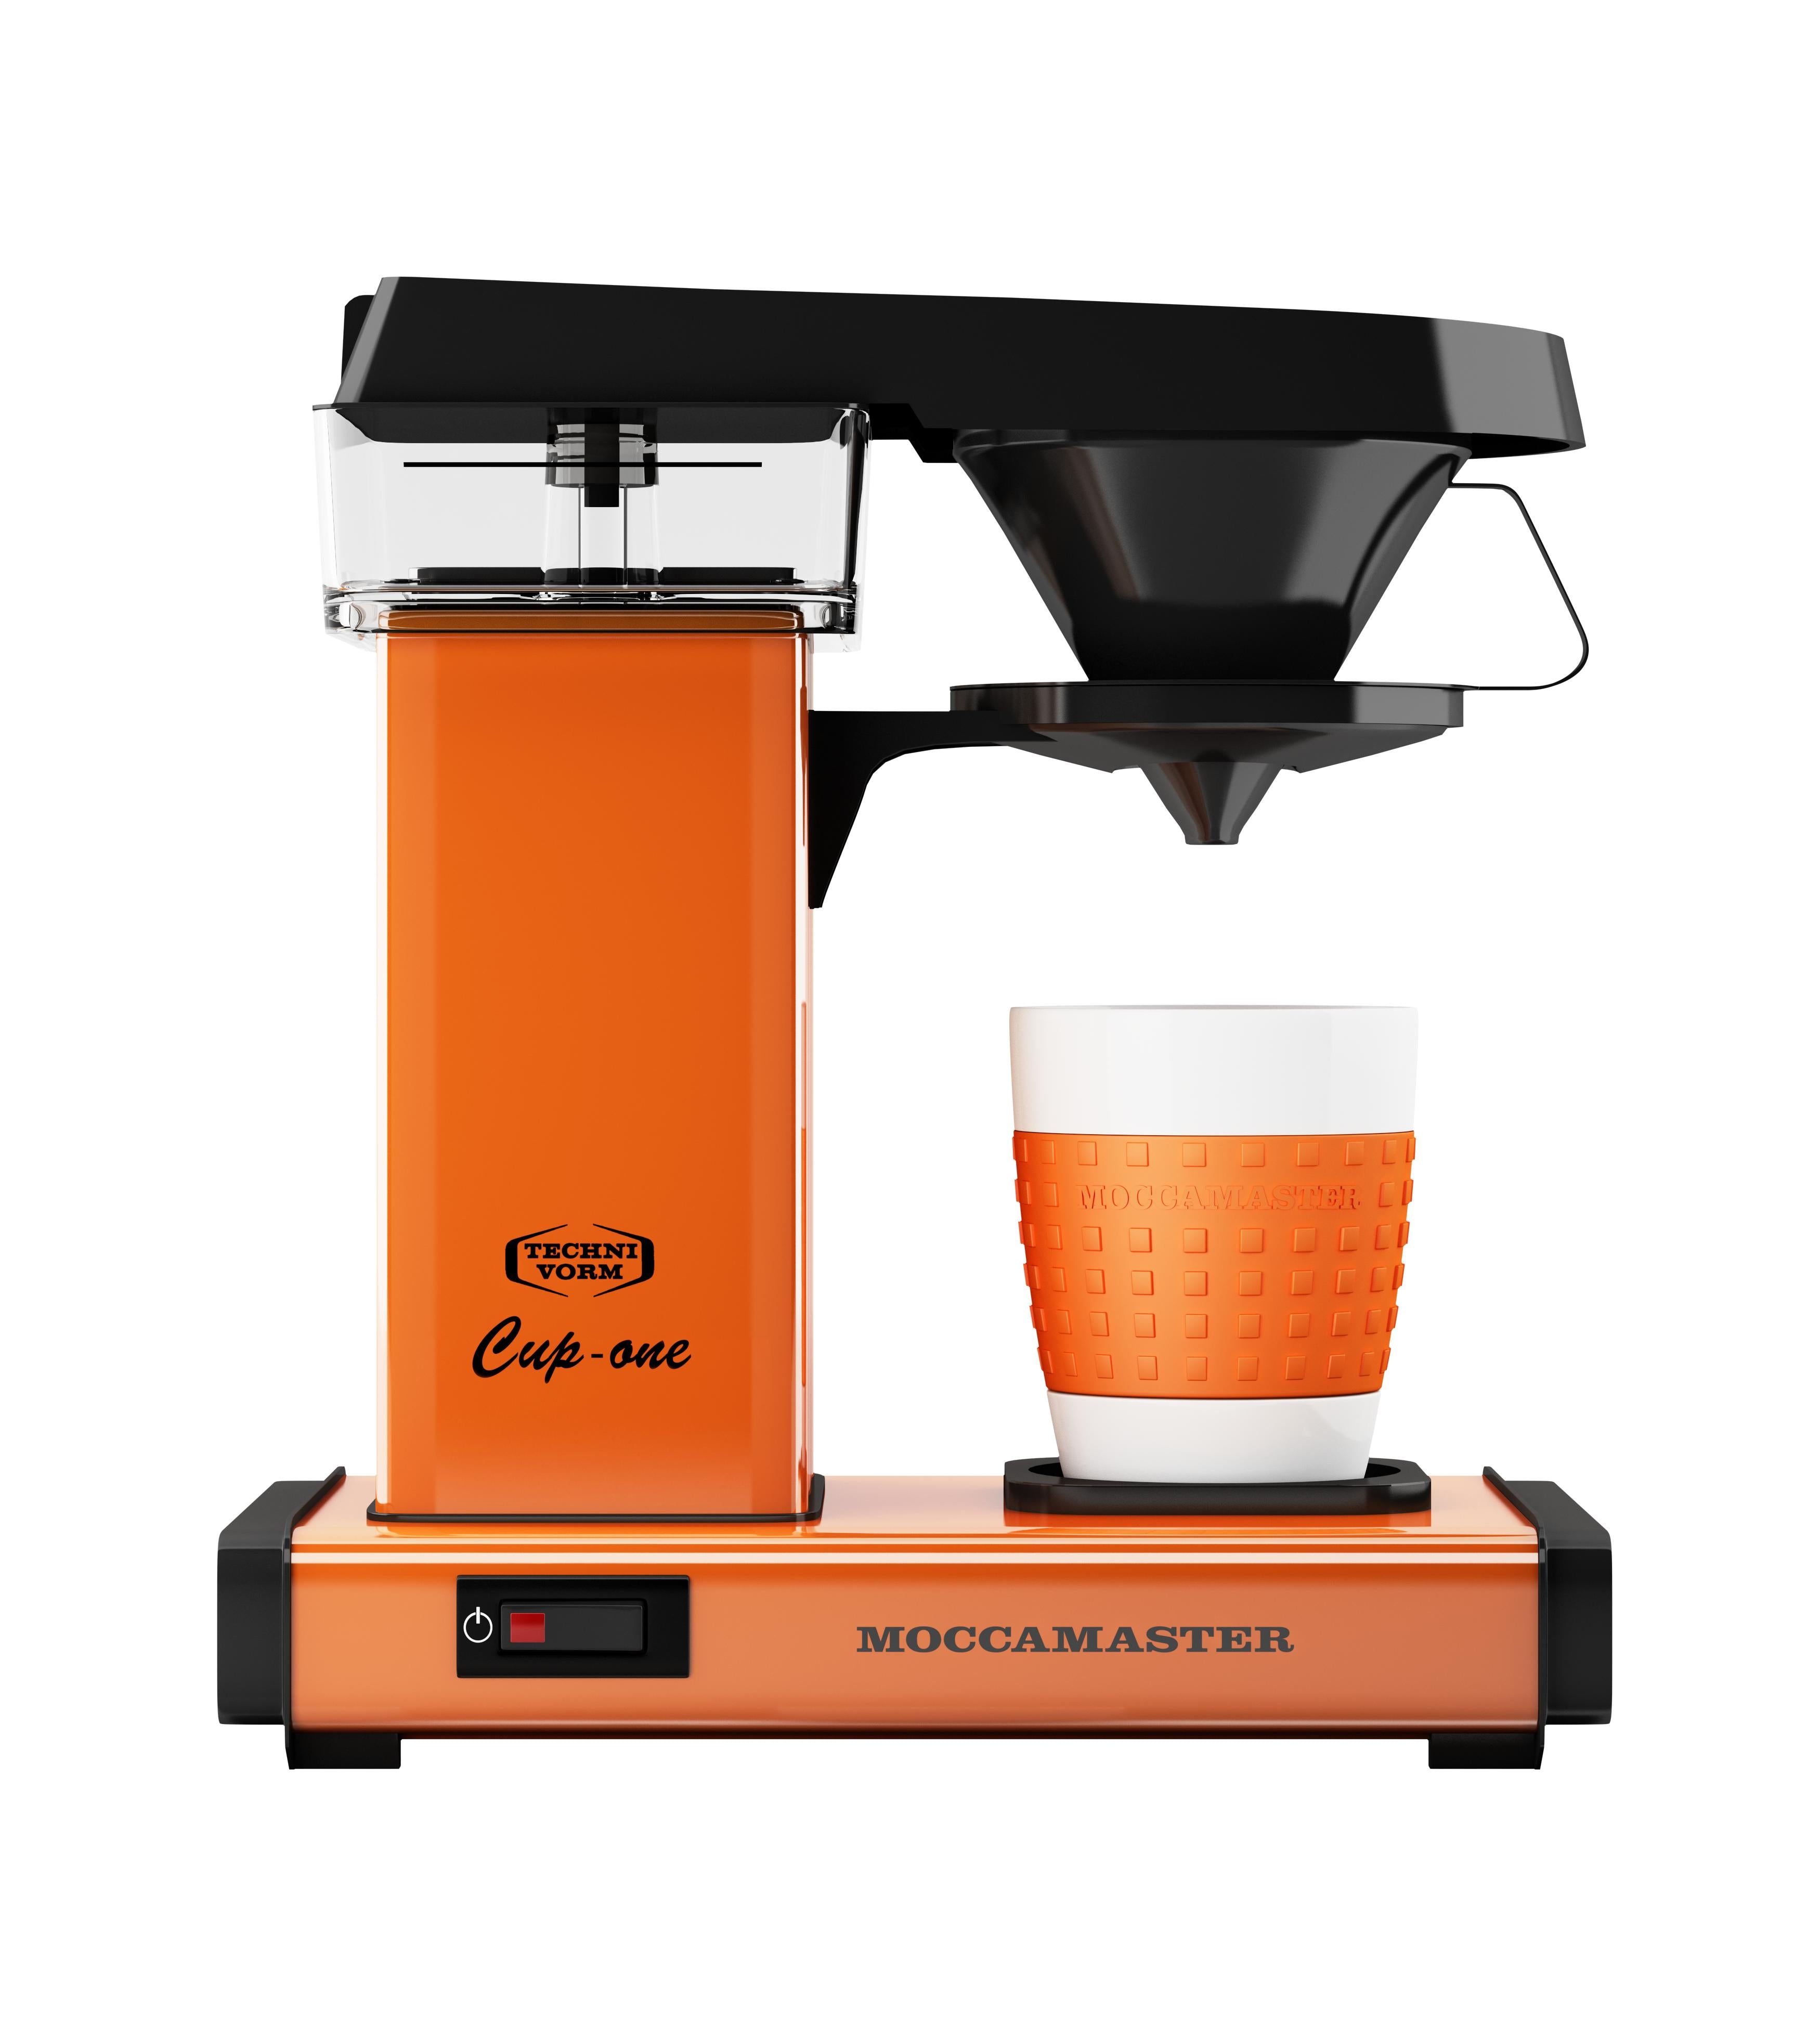 Filterkaffeemaschine Bohnen & Cup-One Moccamaster – Soehne